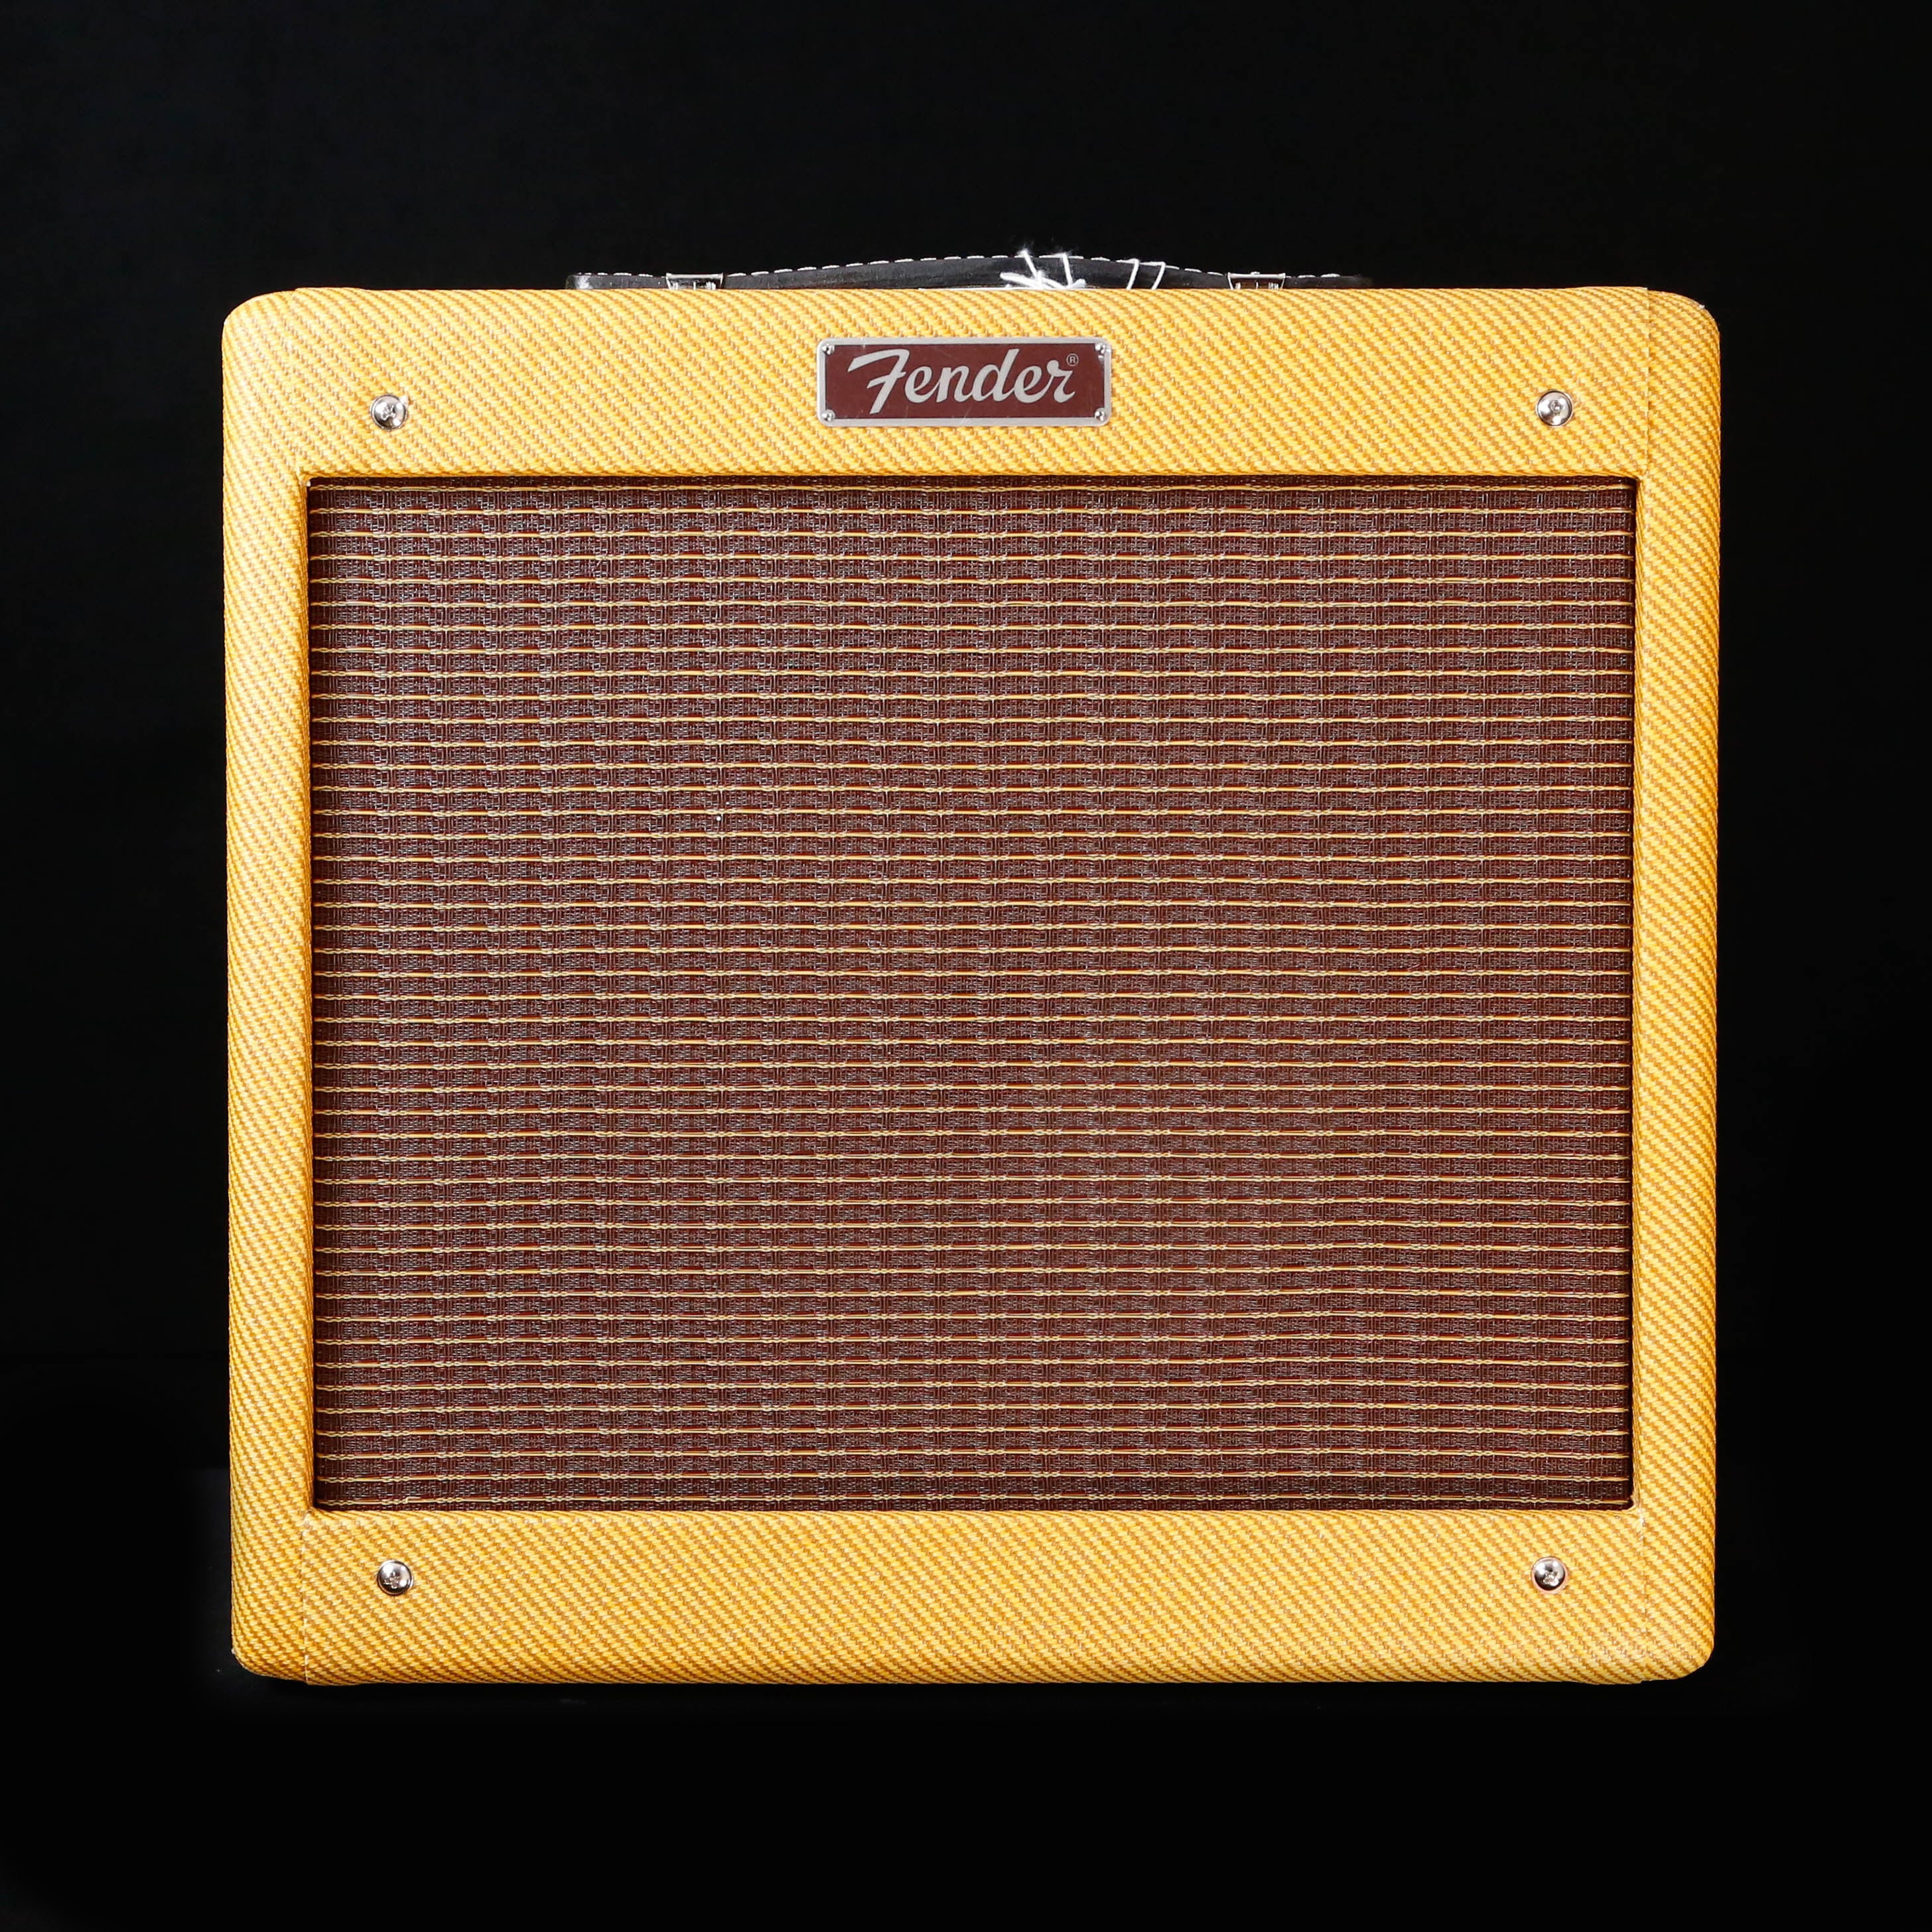 Fender Pro Junior IV, Lacquered Tweed, 120V